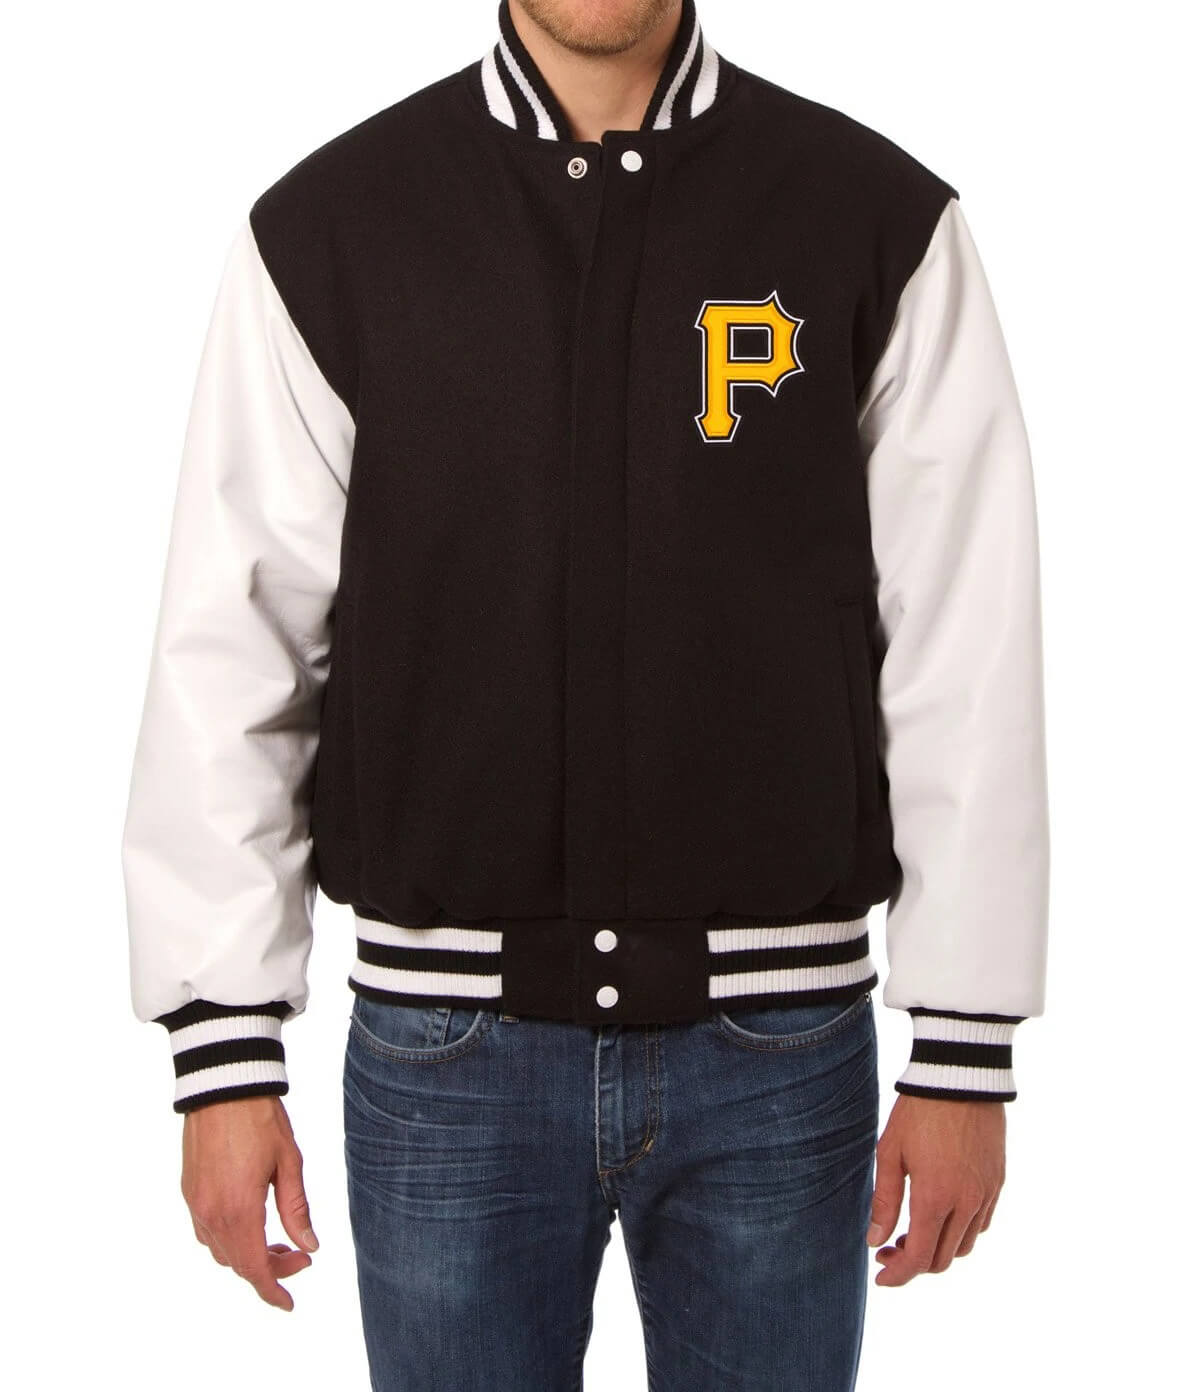 Maker of Jacket Sports Leagues Jackets MLB Vintage Pittsburgh Pirates Black Satin